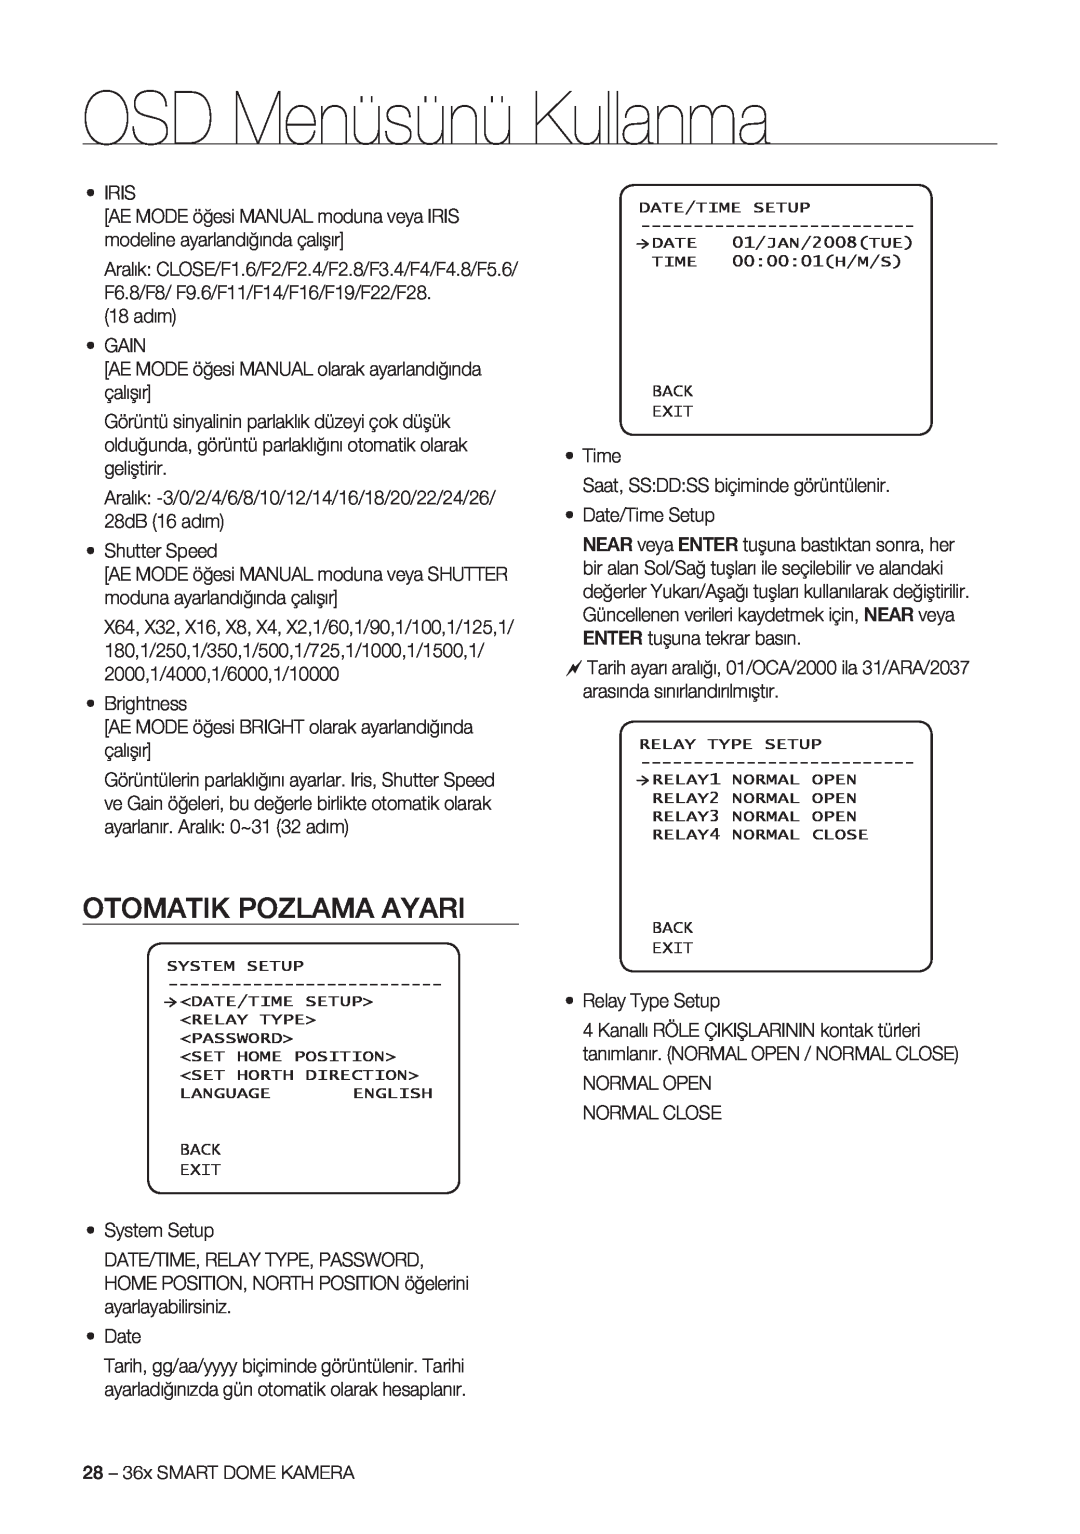 Samsung SCC-C7478P manual OSD Menüsünü Kullanma, Otomatik Pozlama Ayari 